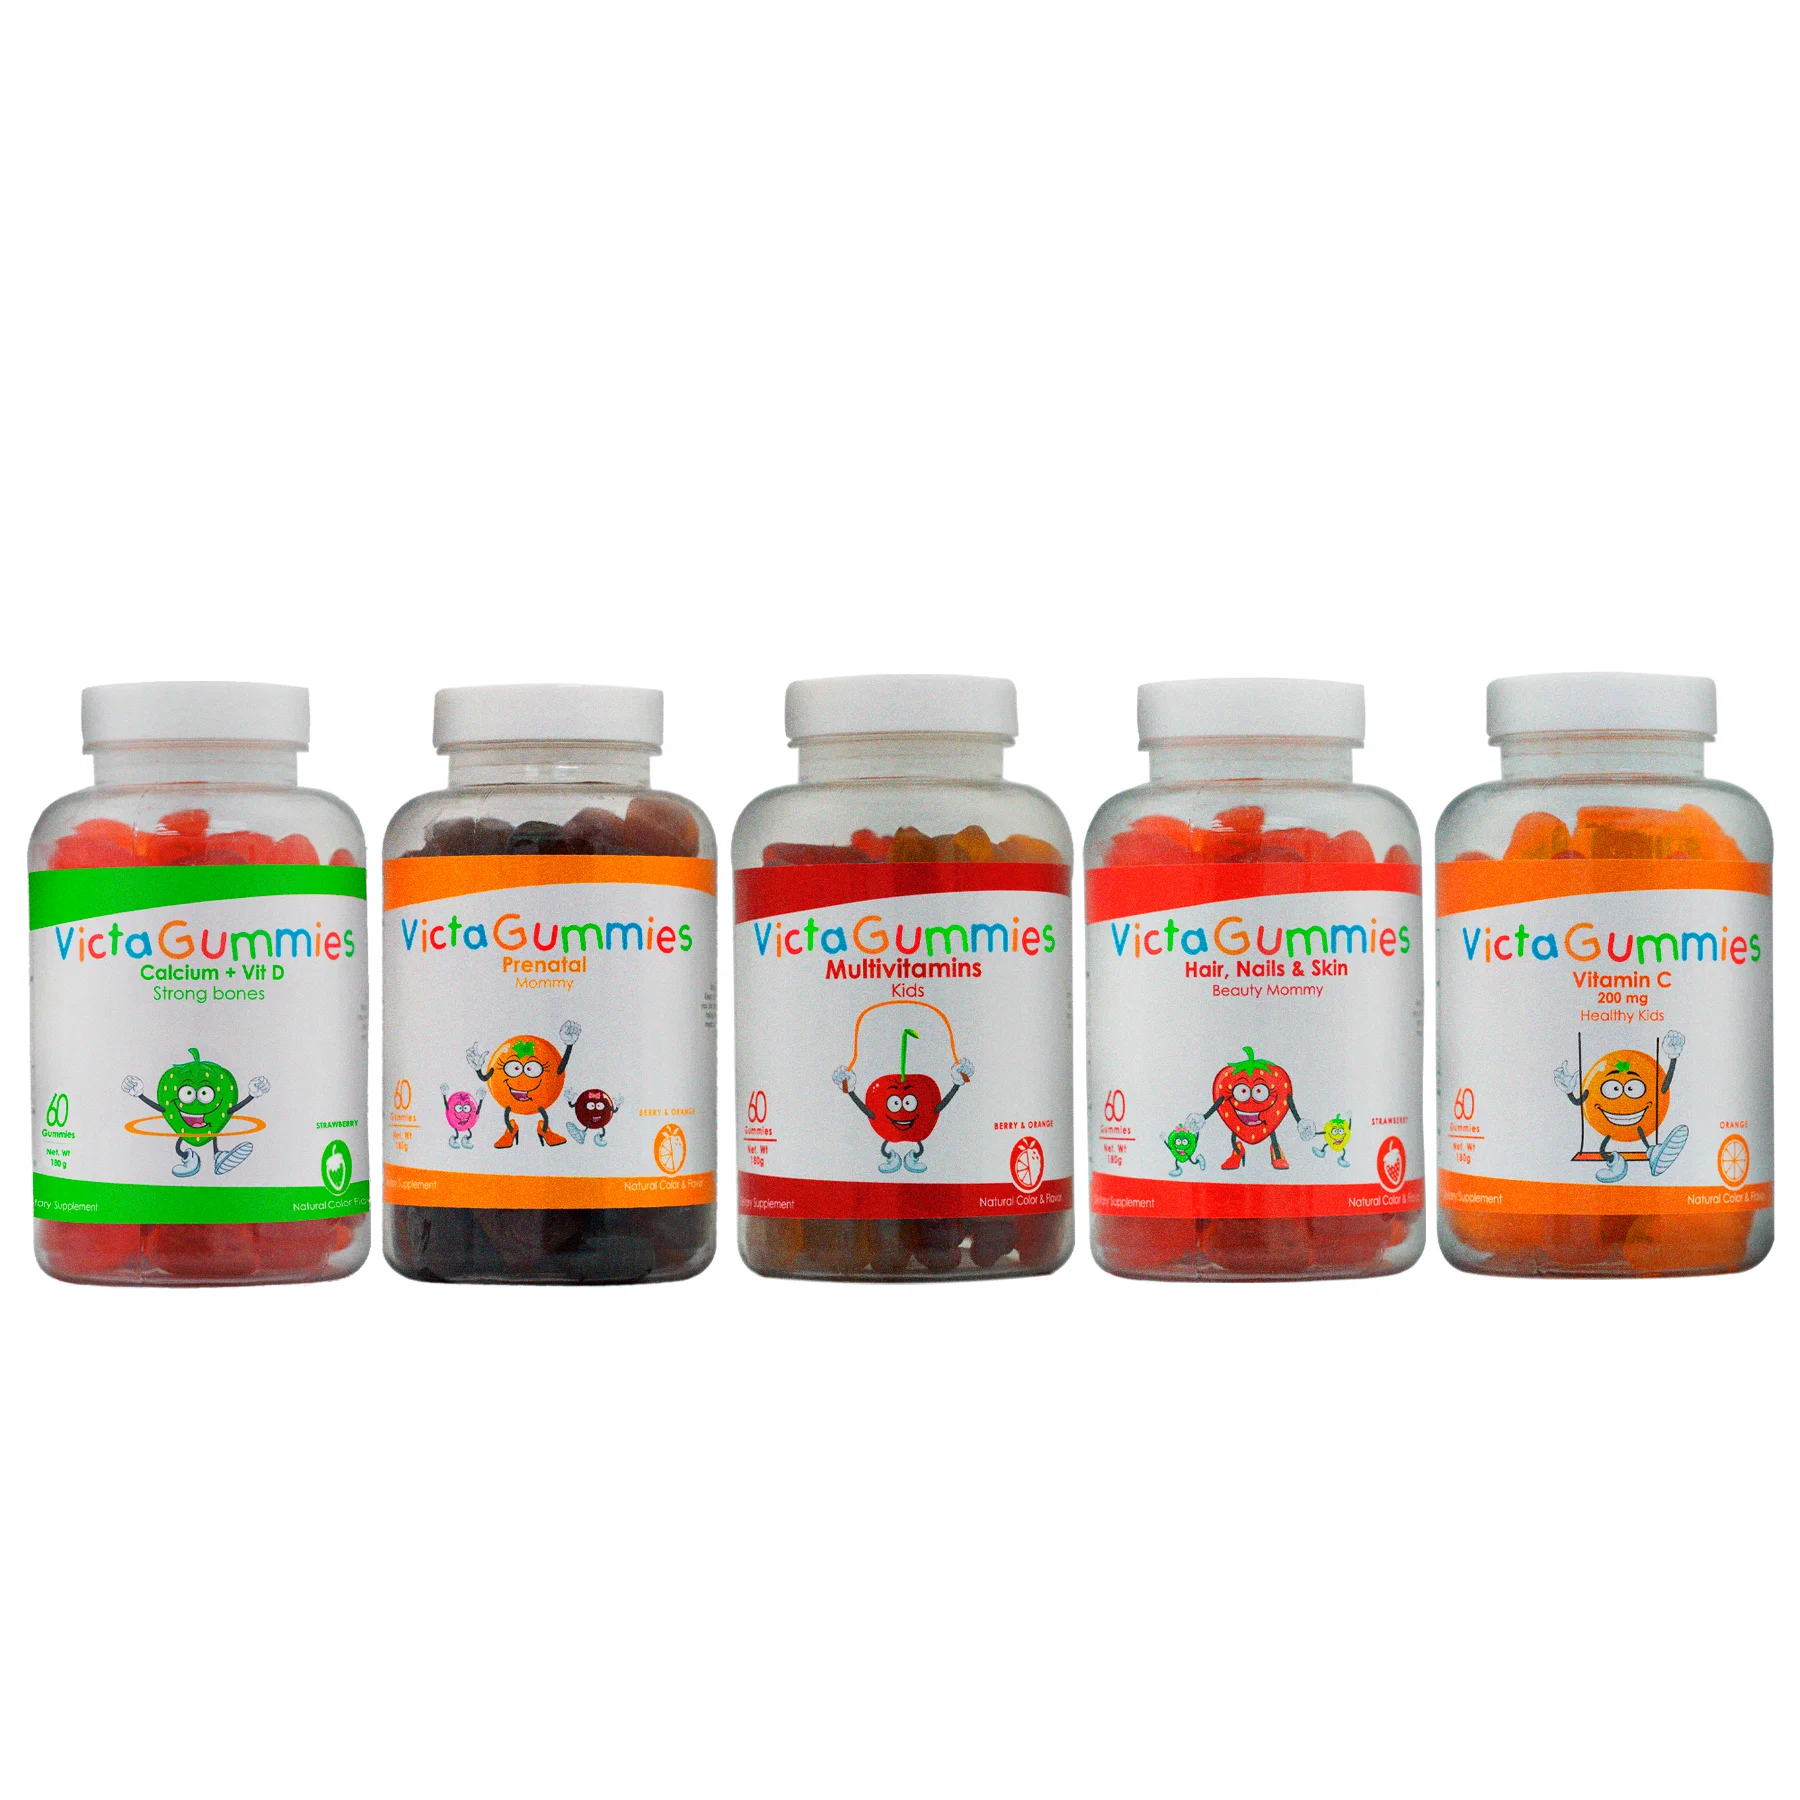 Tastier and More Pleasing VictaGummies Multivitamins 60 gummies per bottle - Food supplement for children